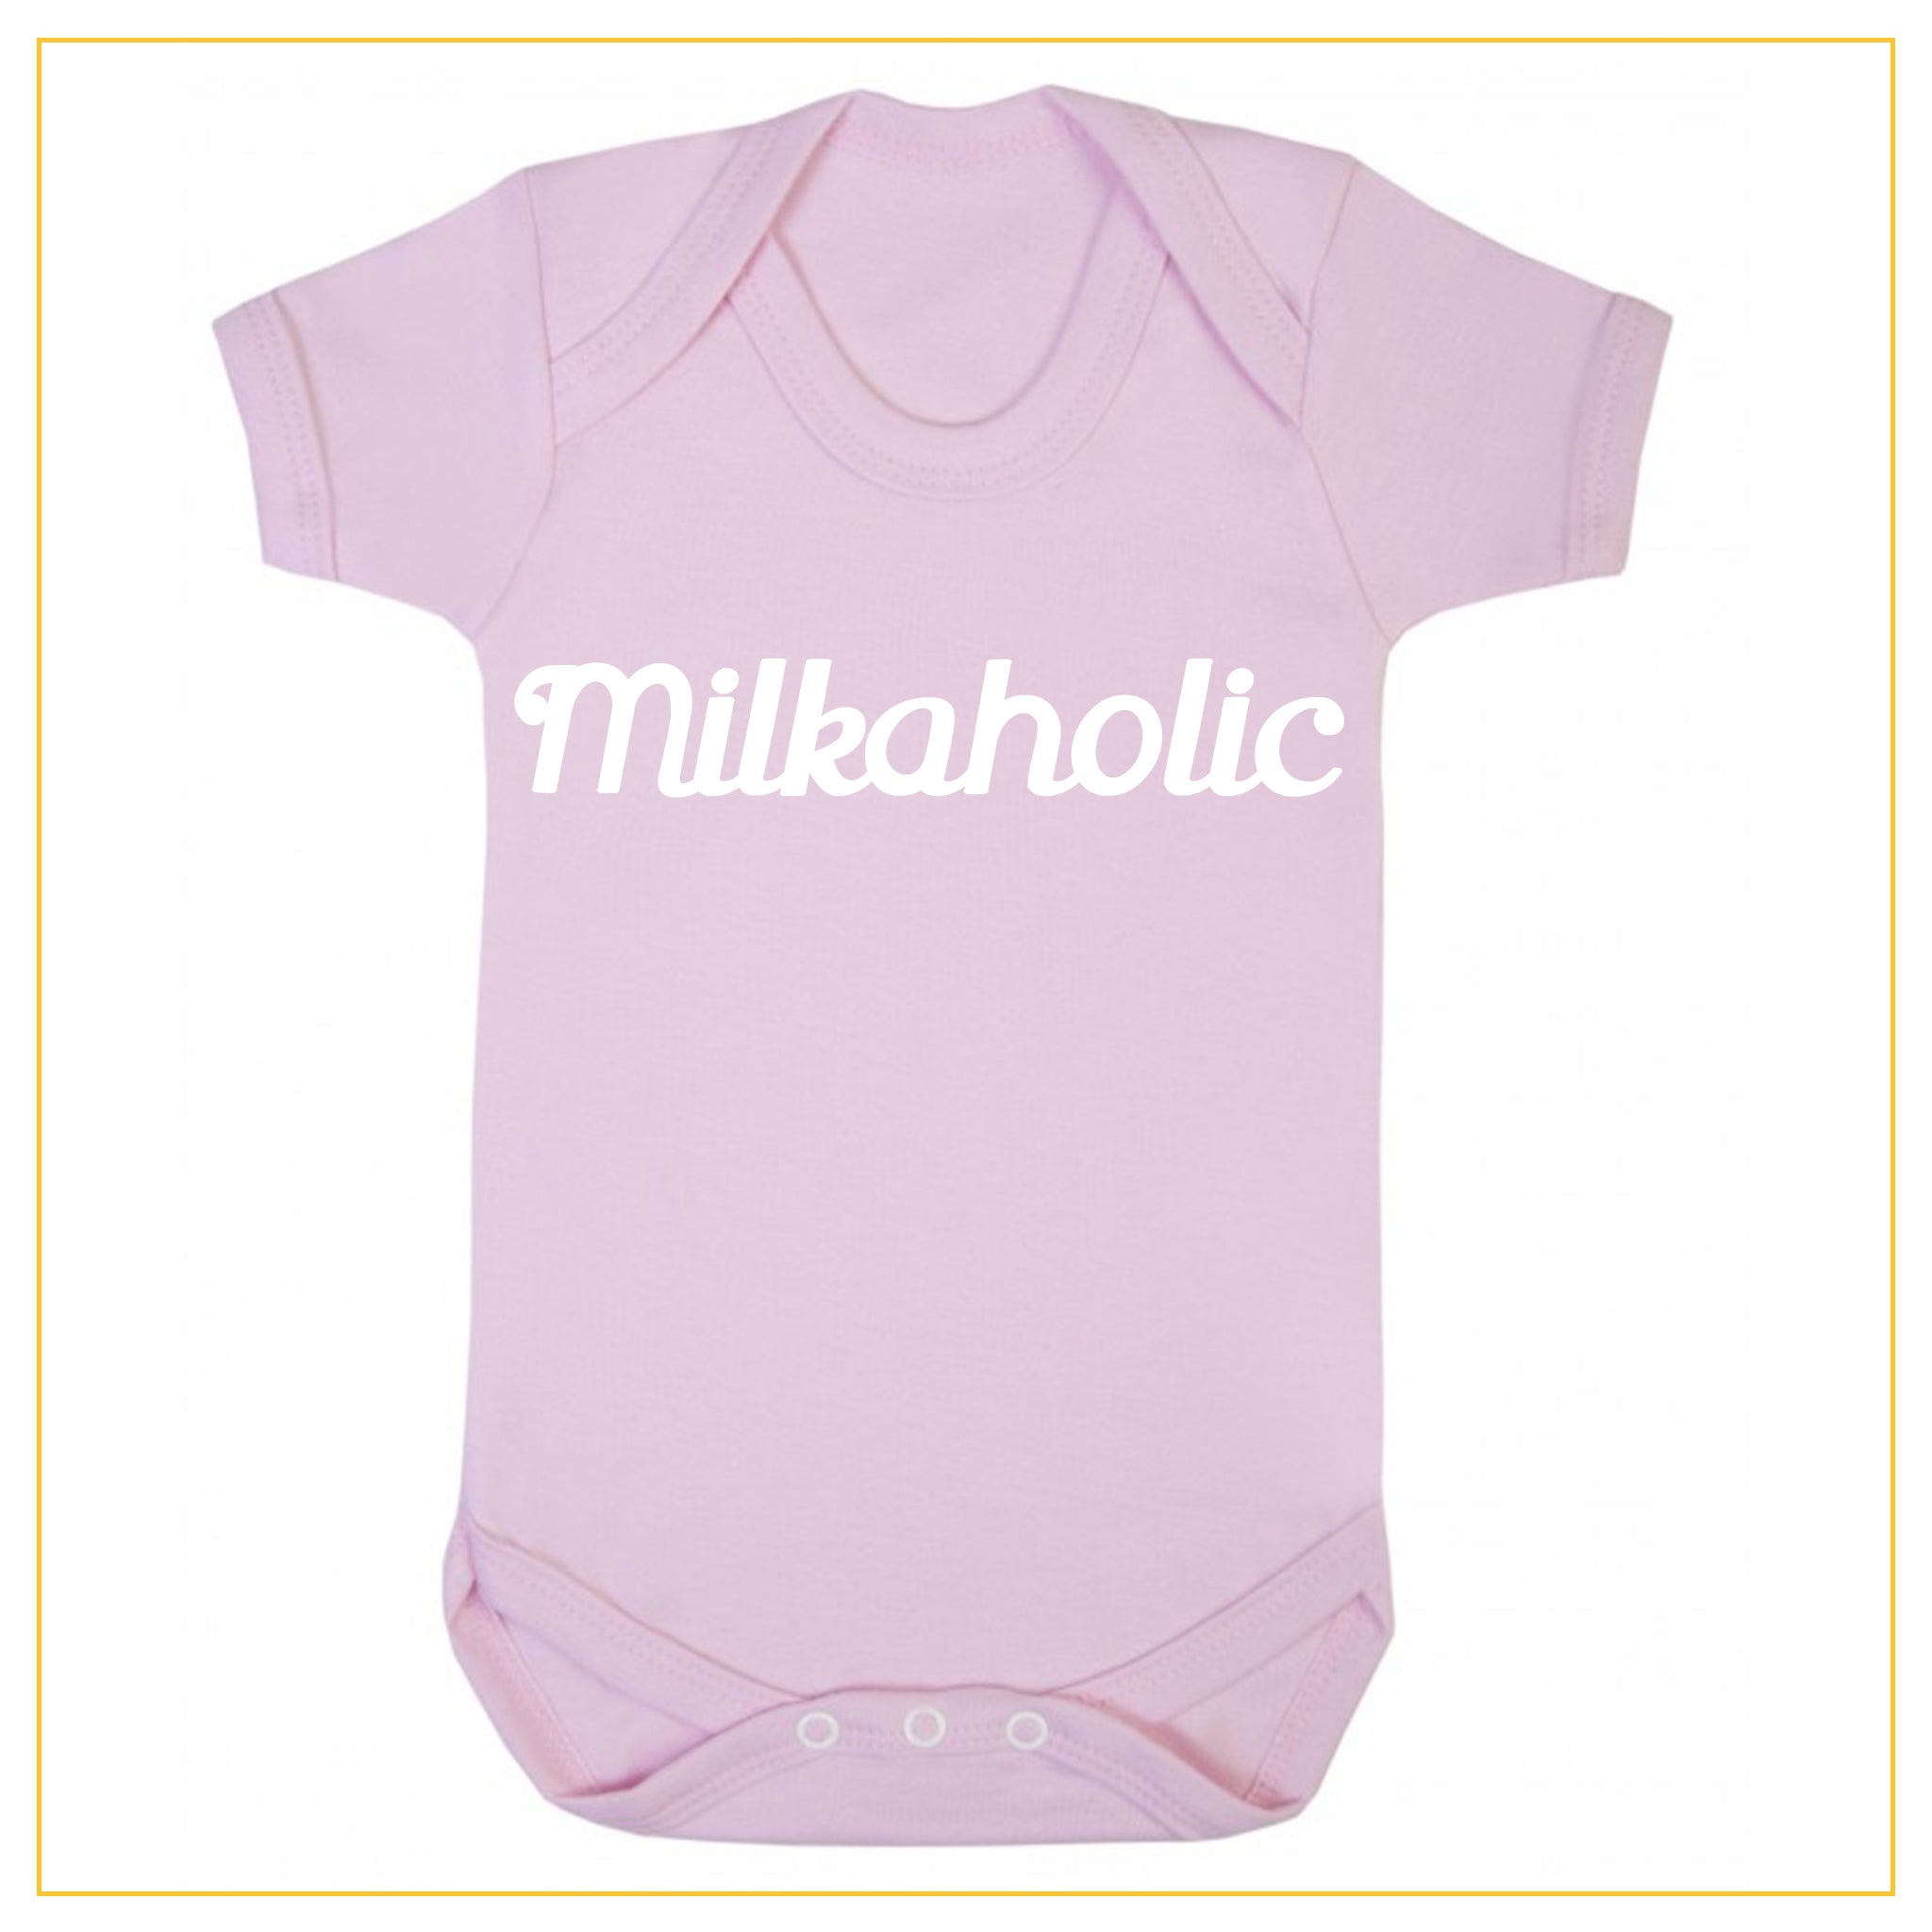 milkaholic novelty baby onesie in dust pink